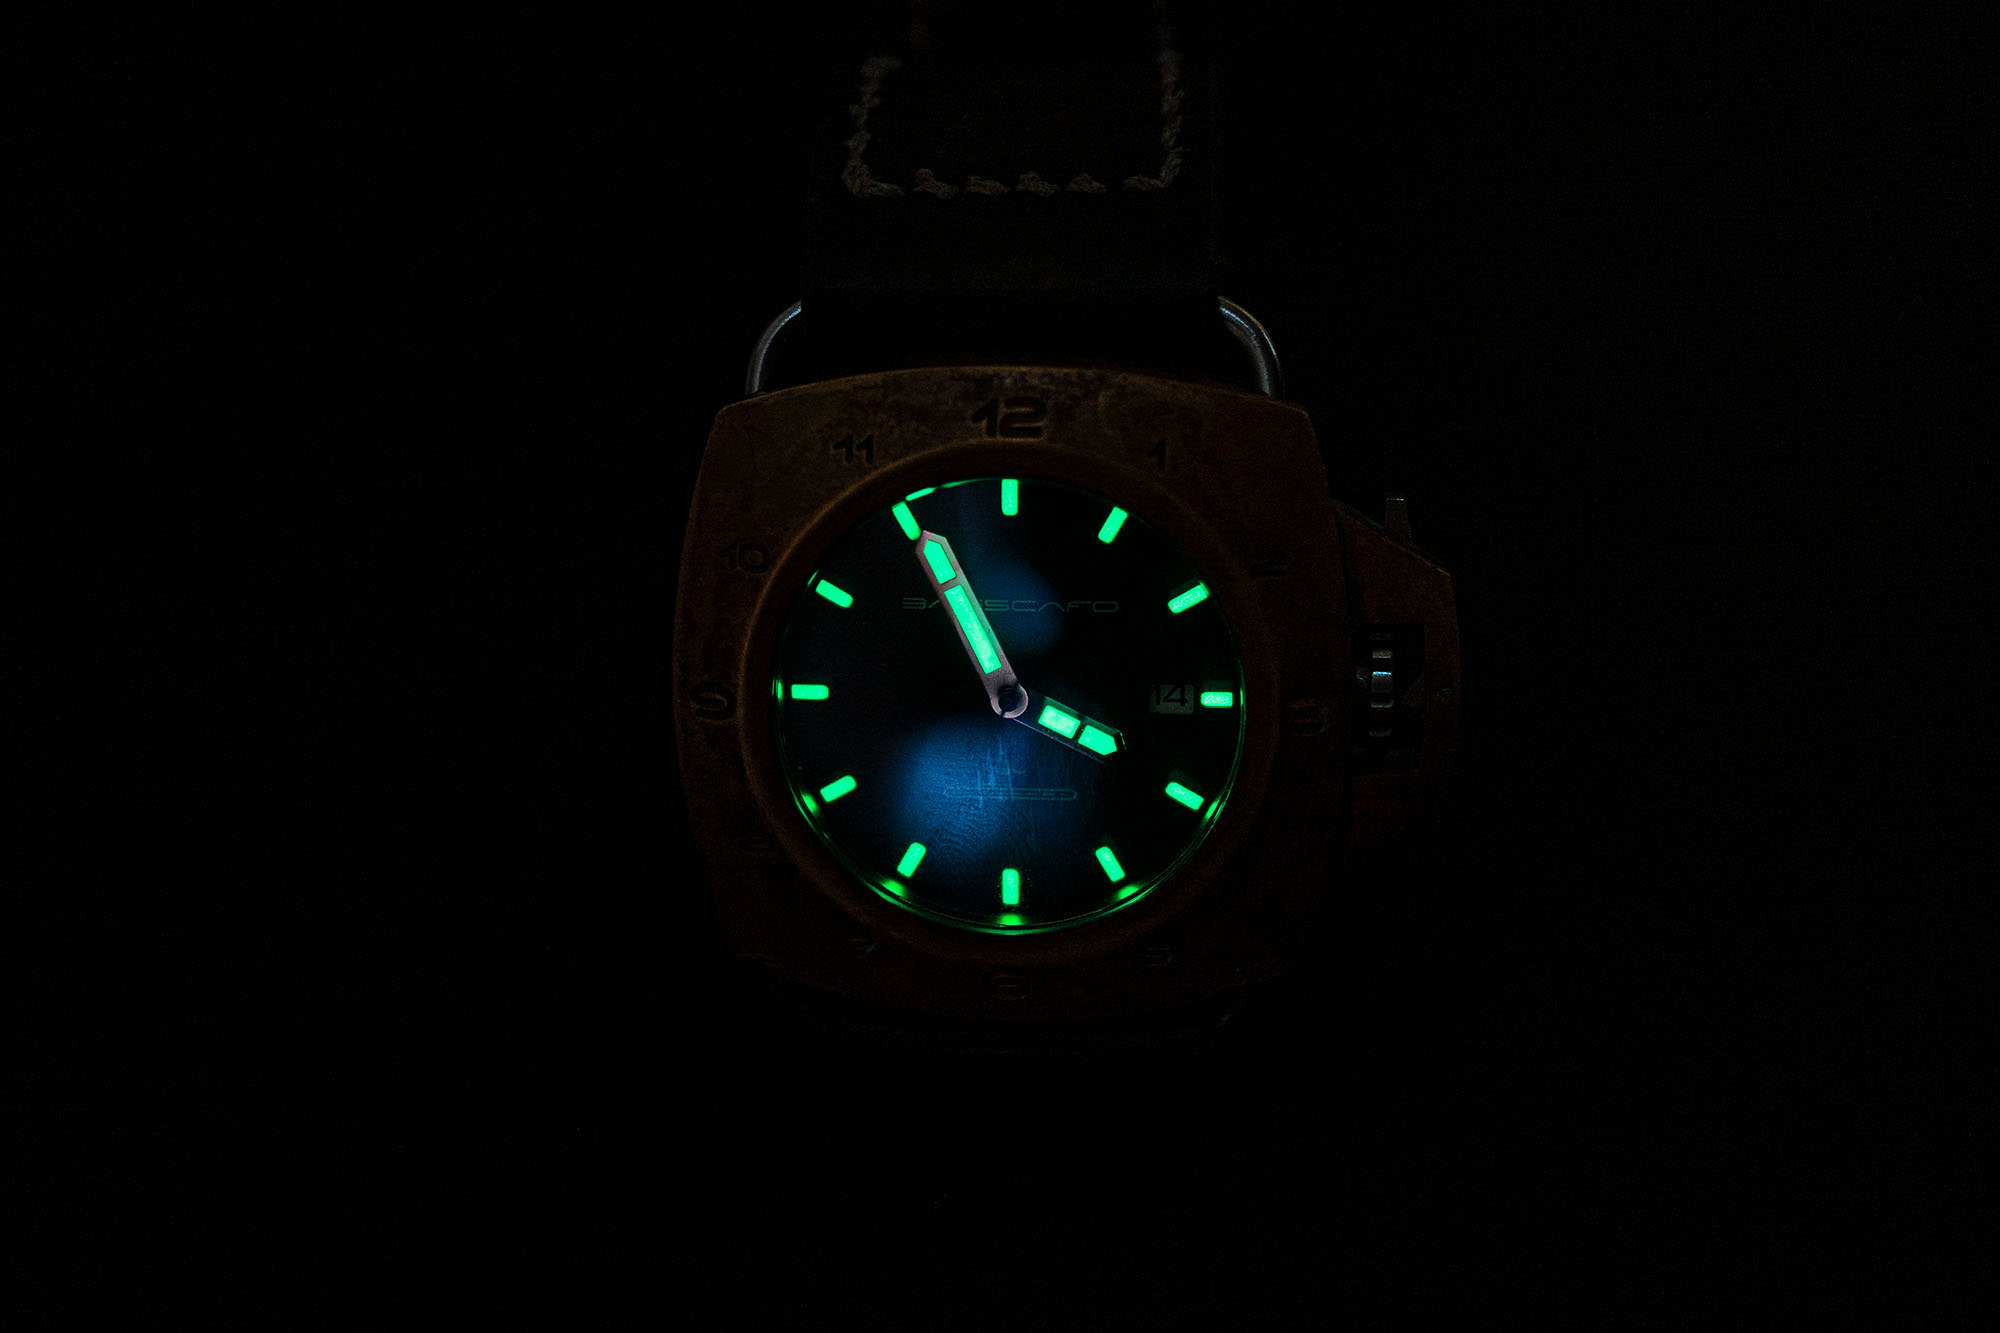 BATISCAFO QUADRO45 Bronze Diving Watch - THE WATCH BLOG